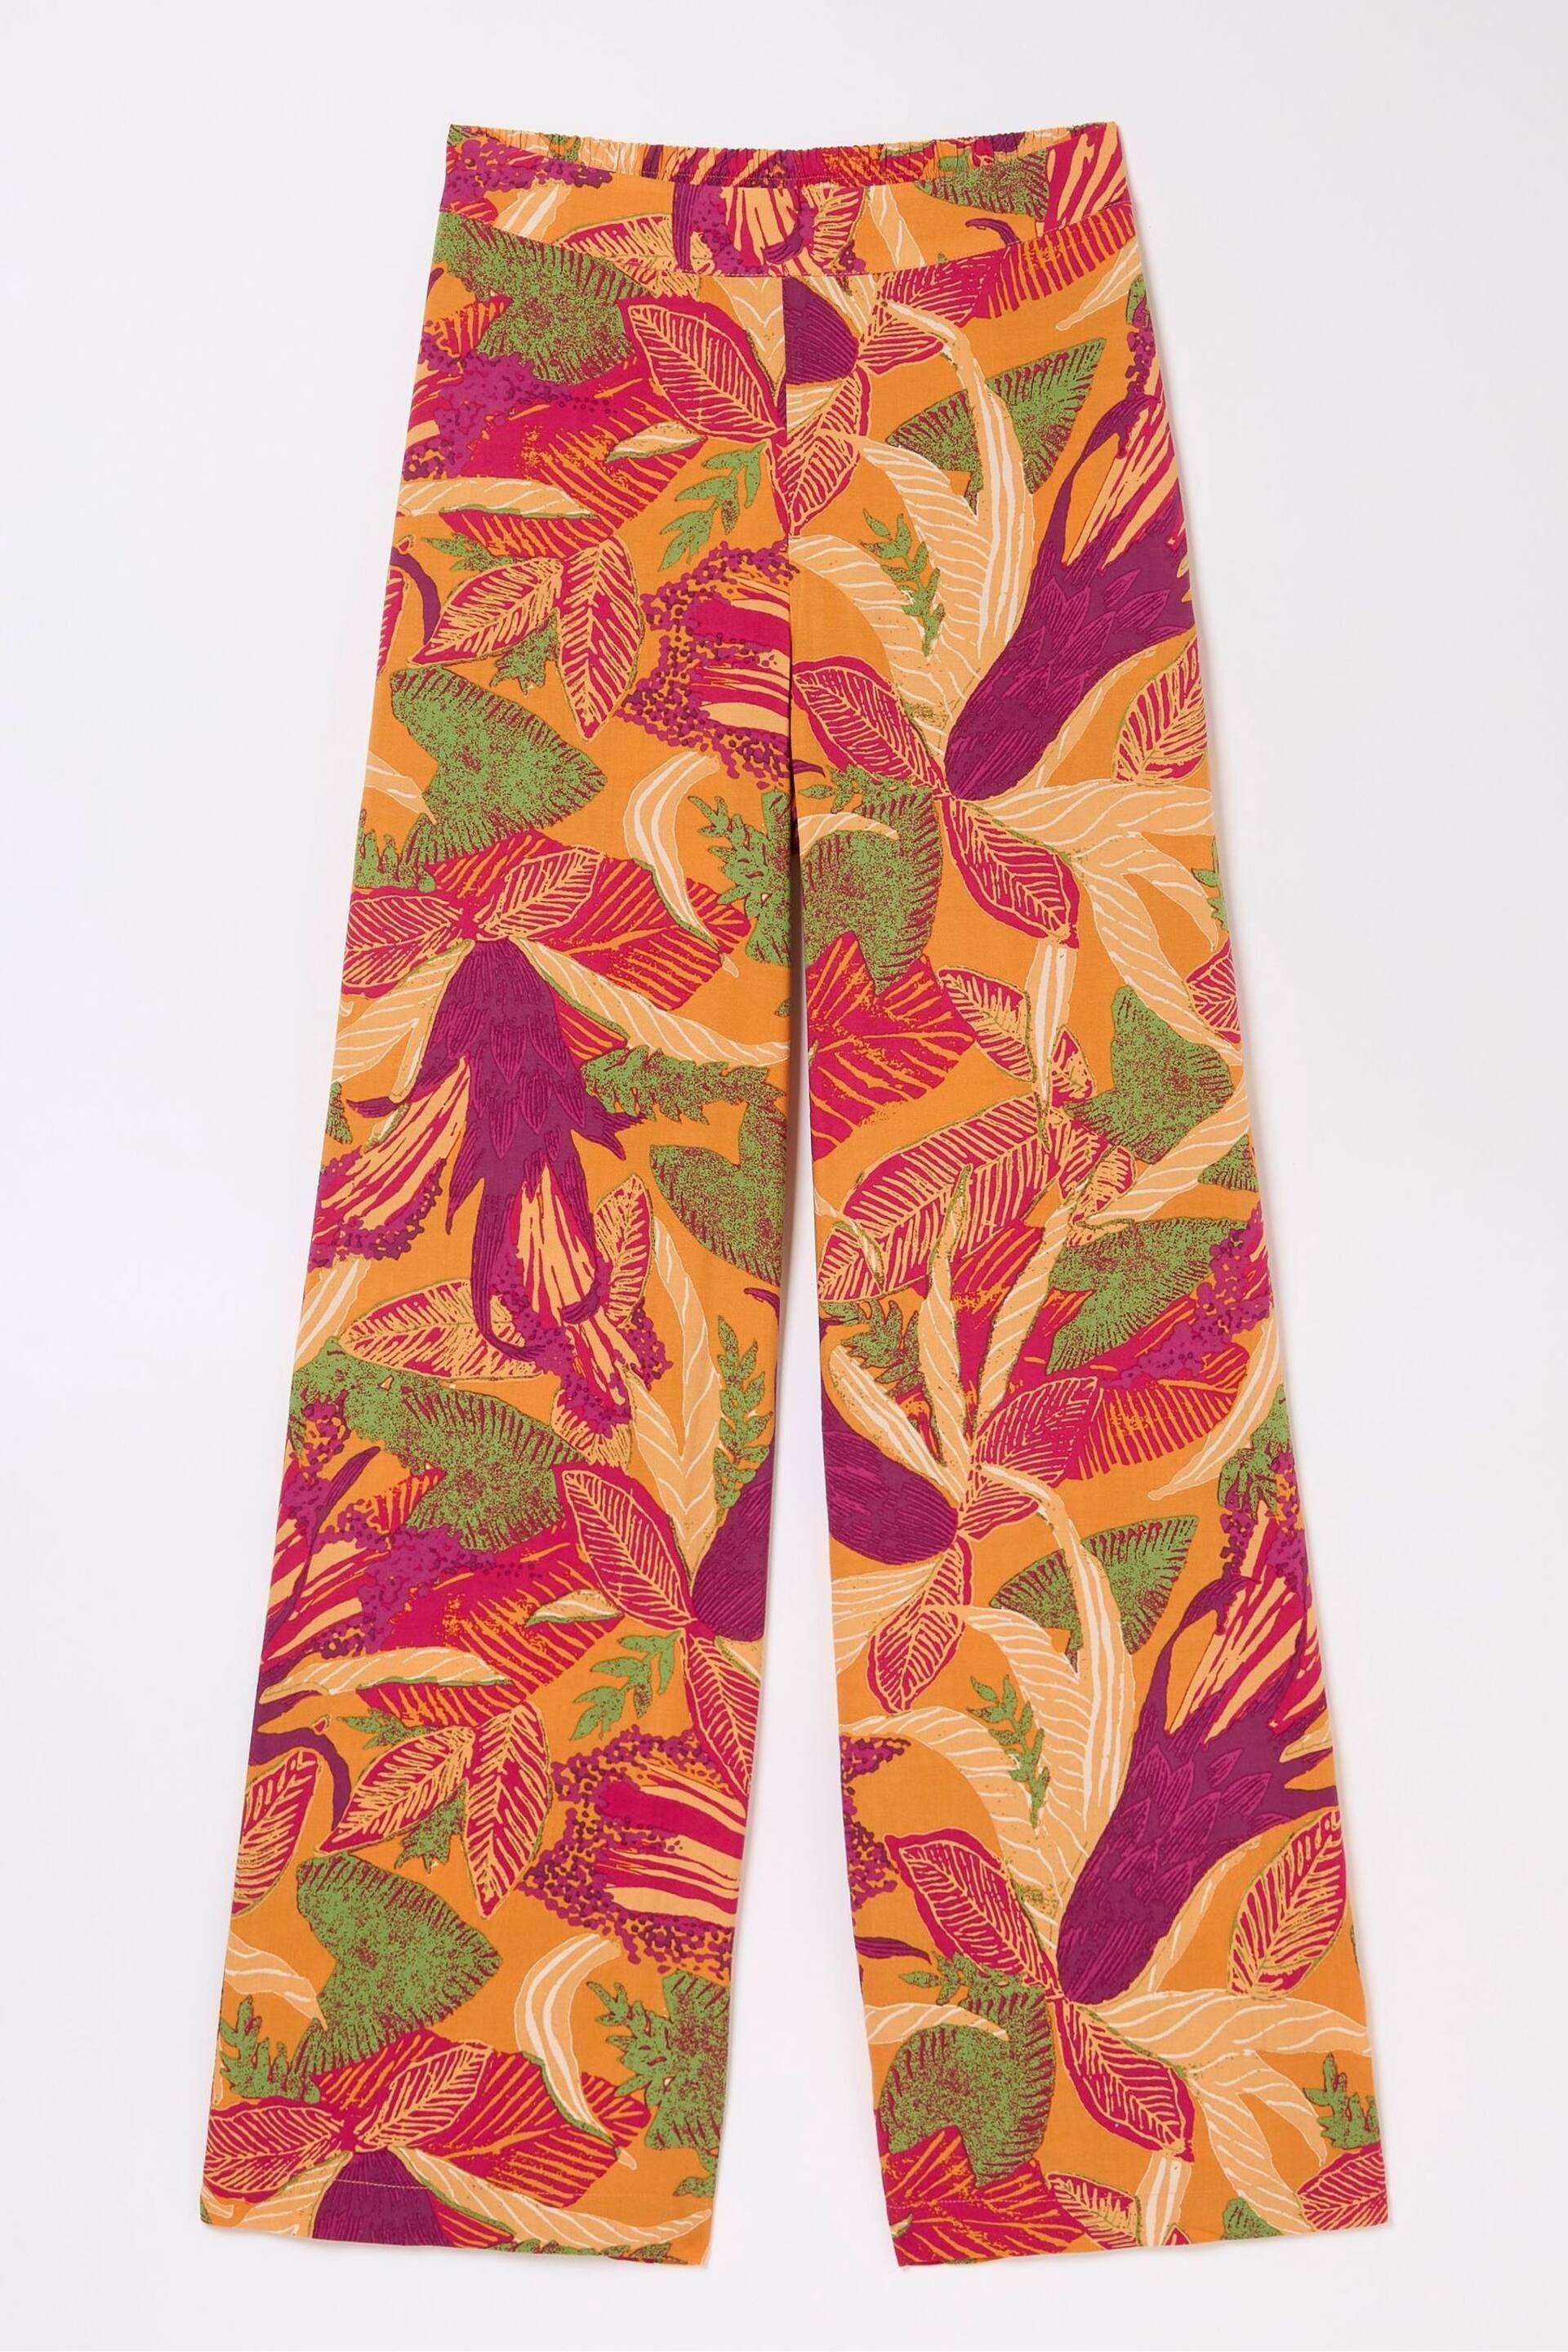 FatFace Orange Falon Tropical Floral Wide Leg Trousers - Image 5 of 5